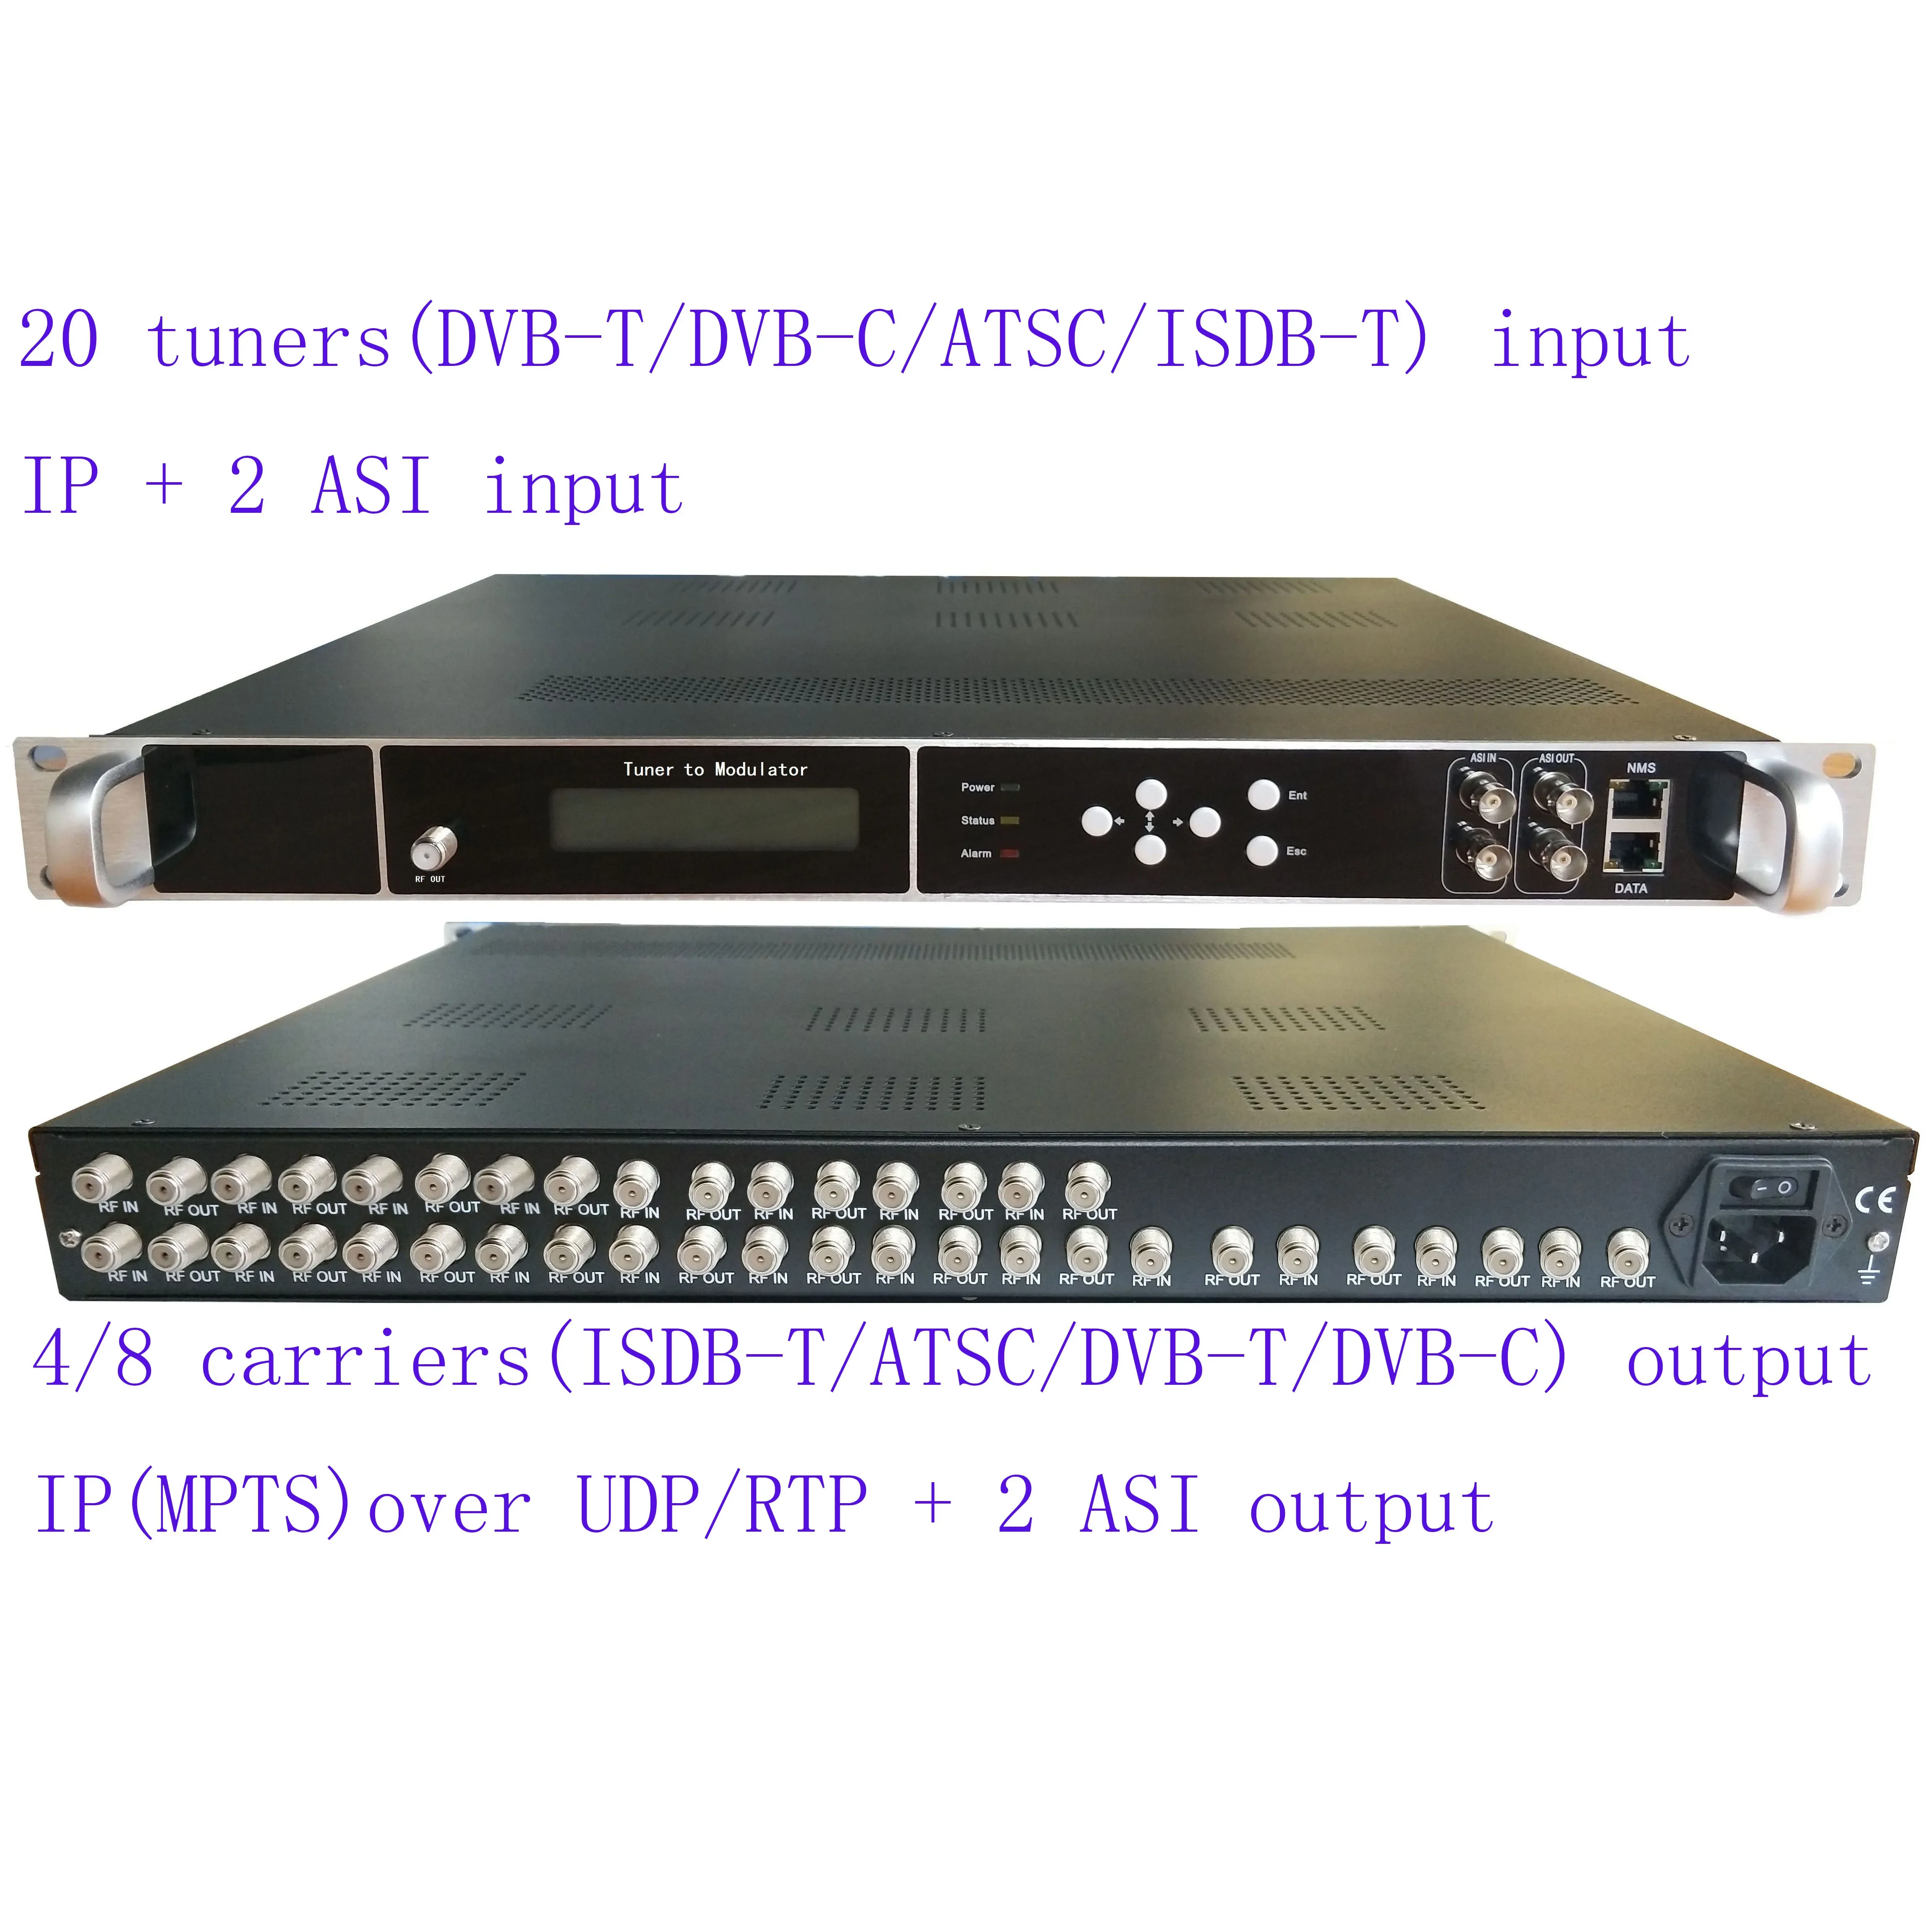 

20 way dvb-s2/S to ATSC catv digital modulator, 20 way ATSC tuner to ATSC RF modulator, TV headend for hotel/hospital/school